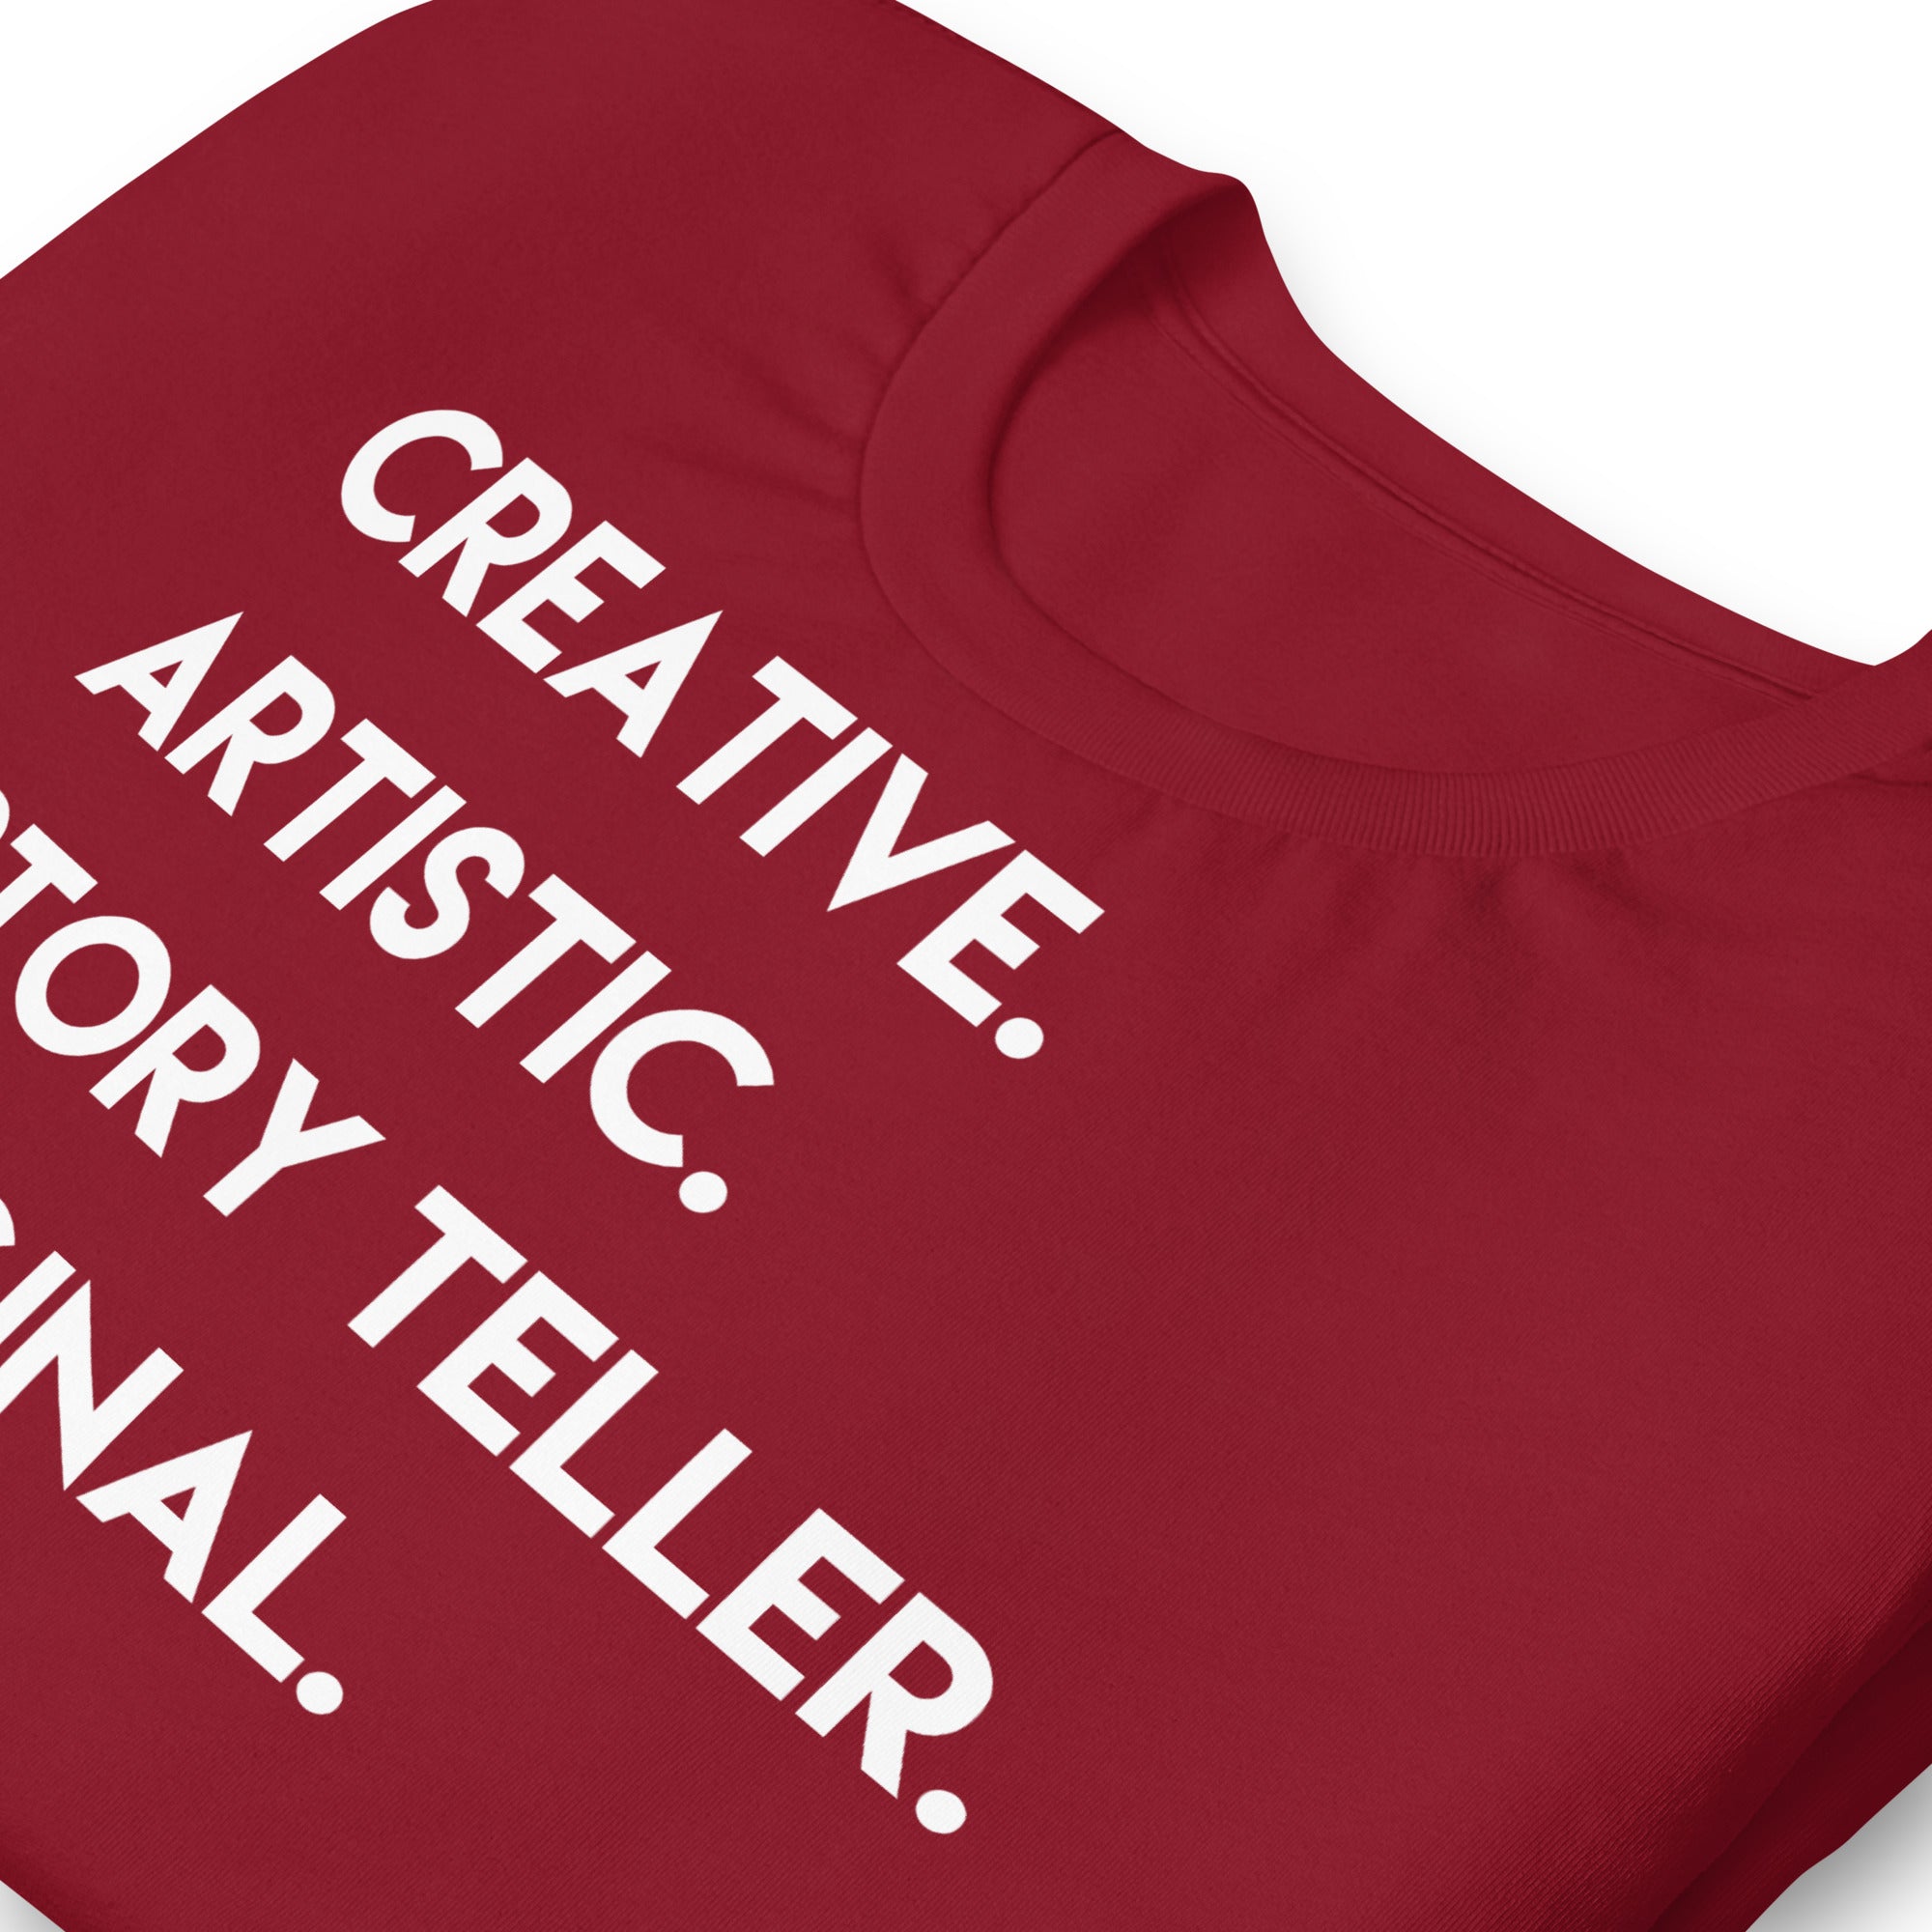 Creative - Short-Sleeve Staple Unisex T-shirt